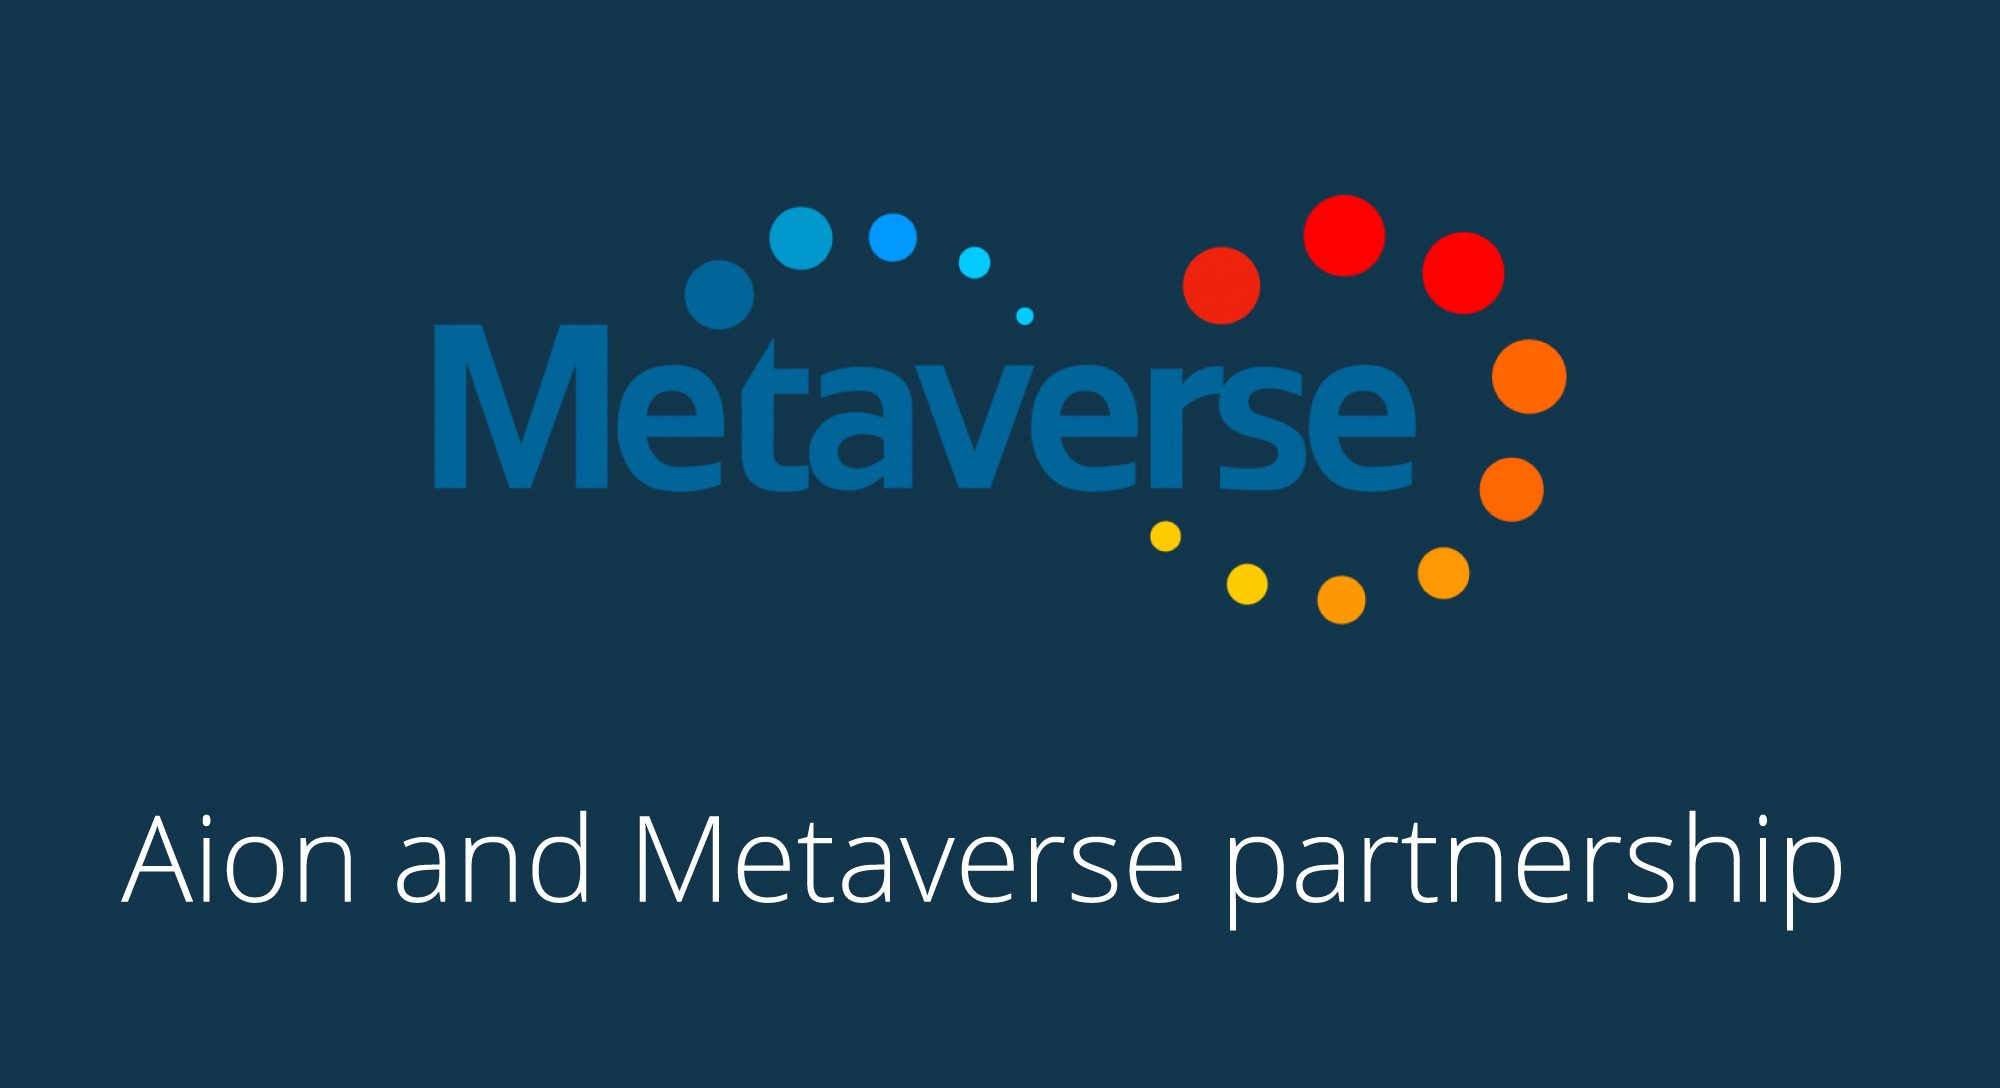 metaverse application development